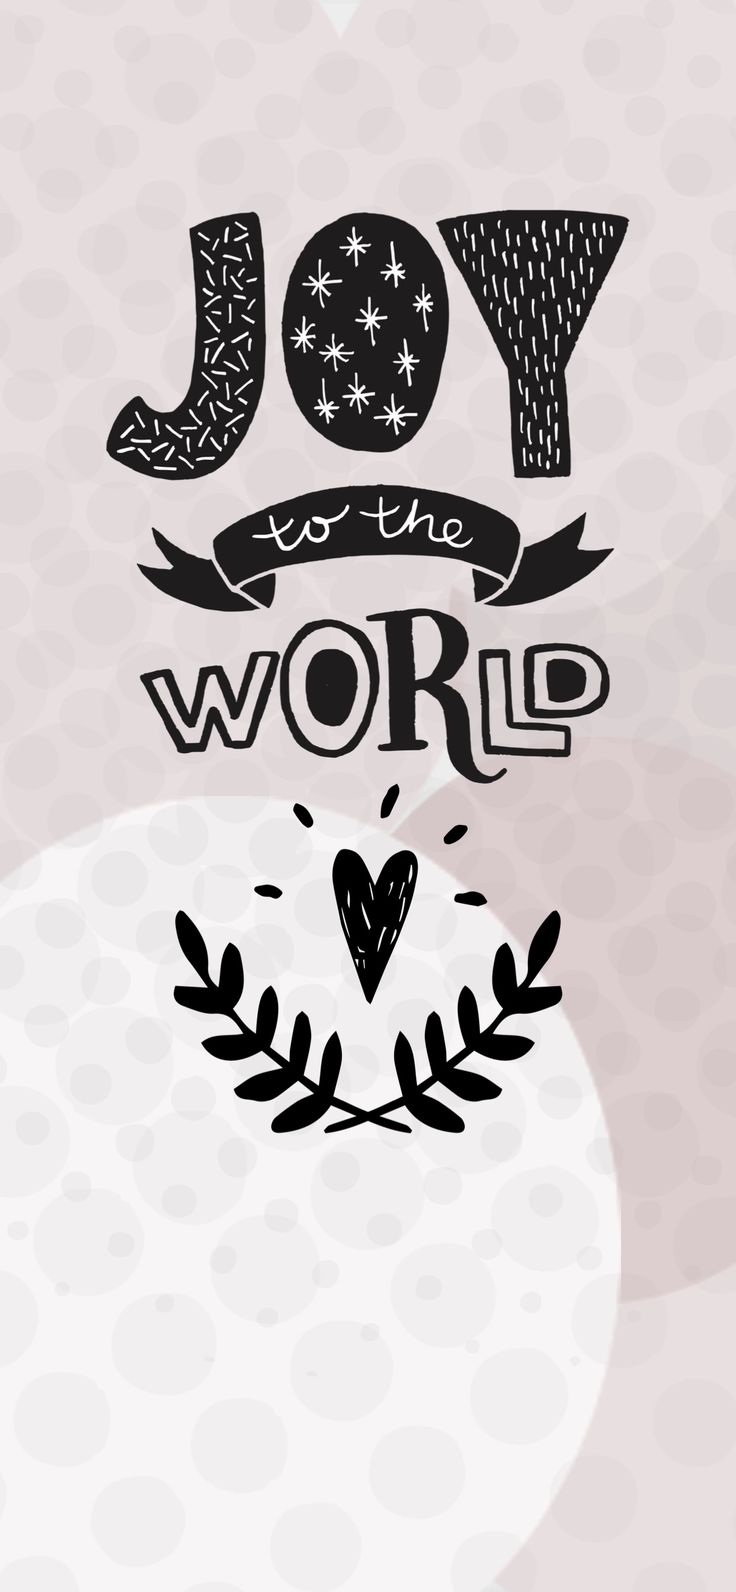 iPhone XS Max. “Joy to the World”. World wallpaper, Joy to the world, iPhone wallpaper